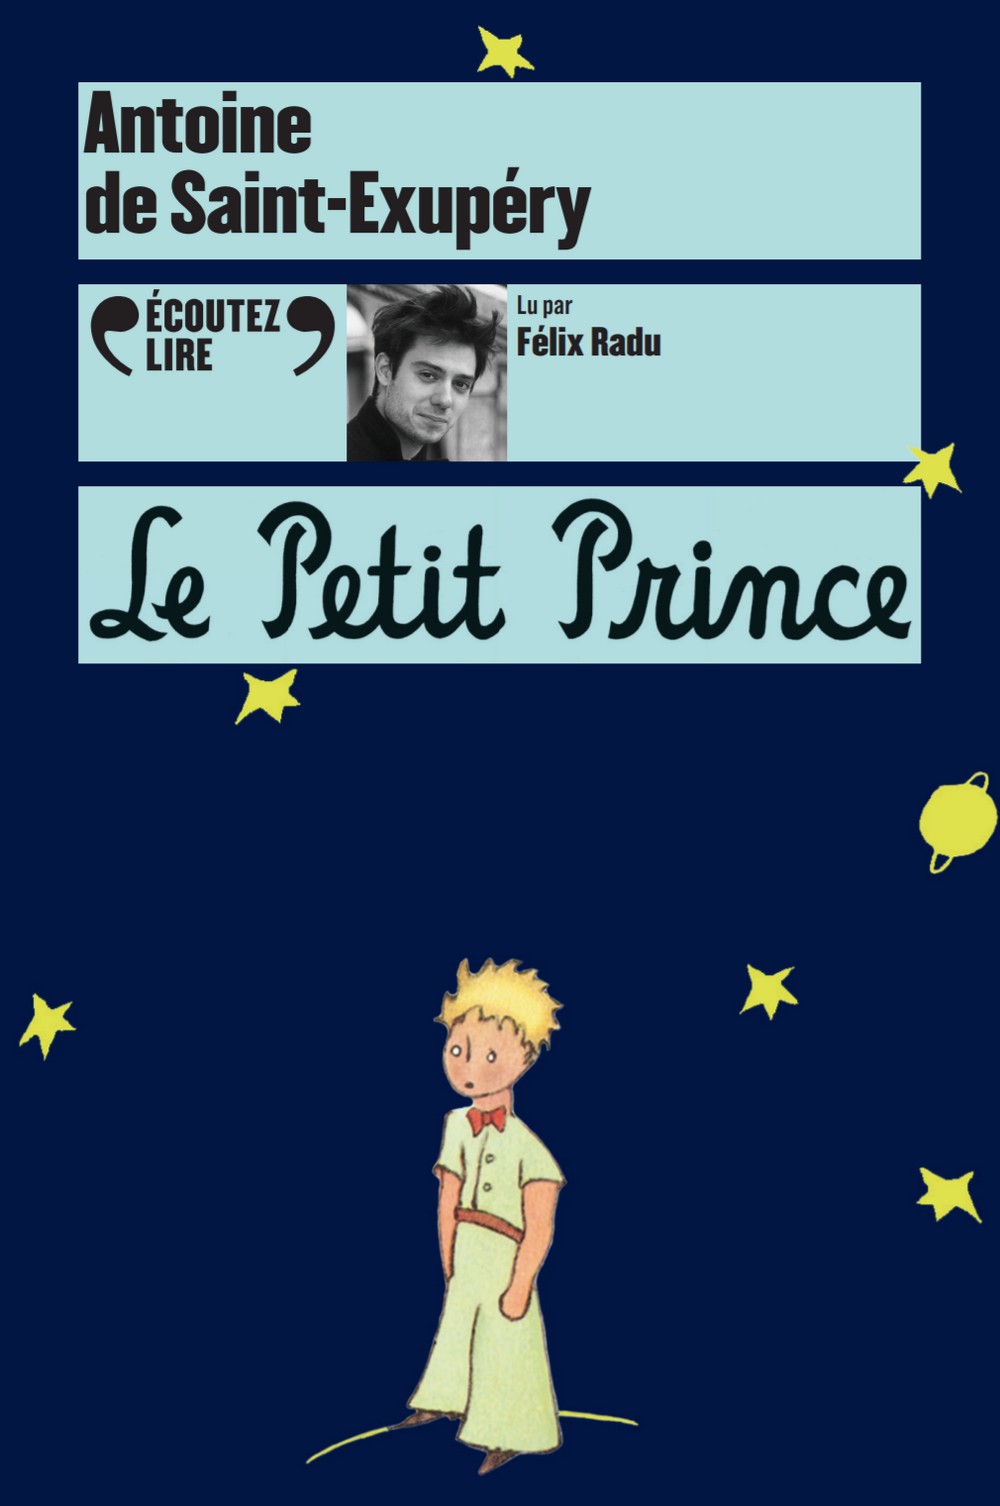 Audiobook : The Little Prince by Felix Radu (French Language)